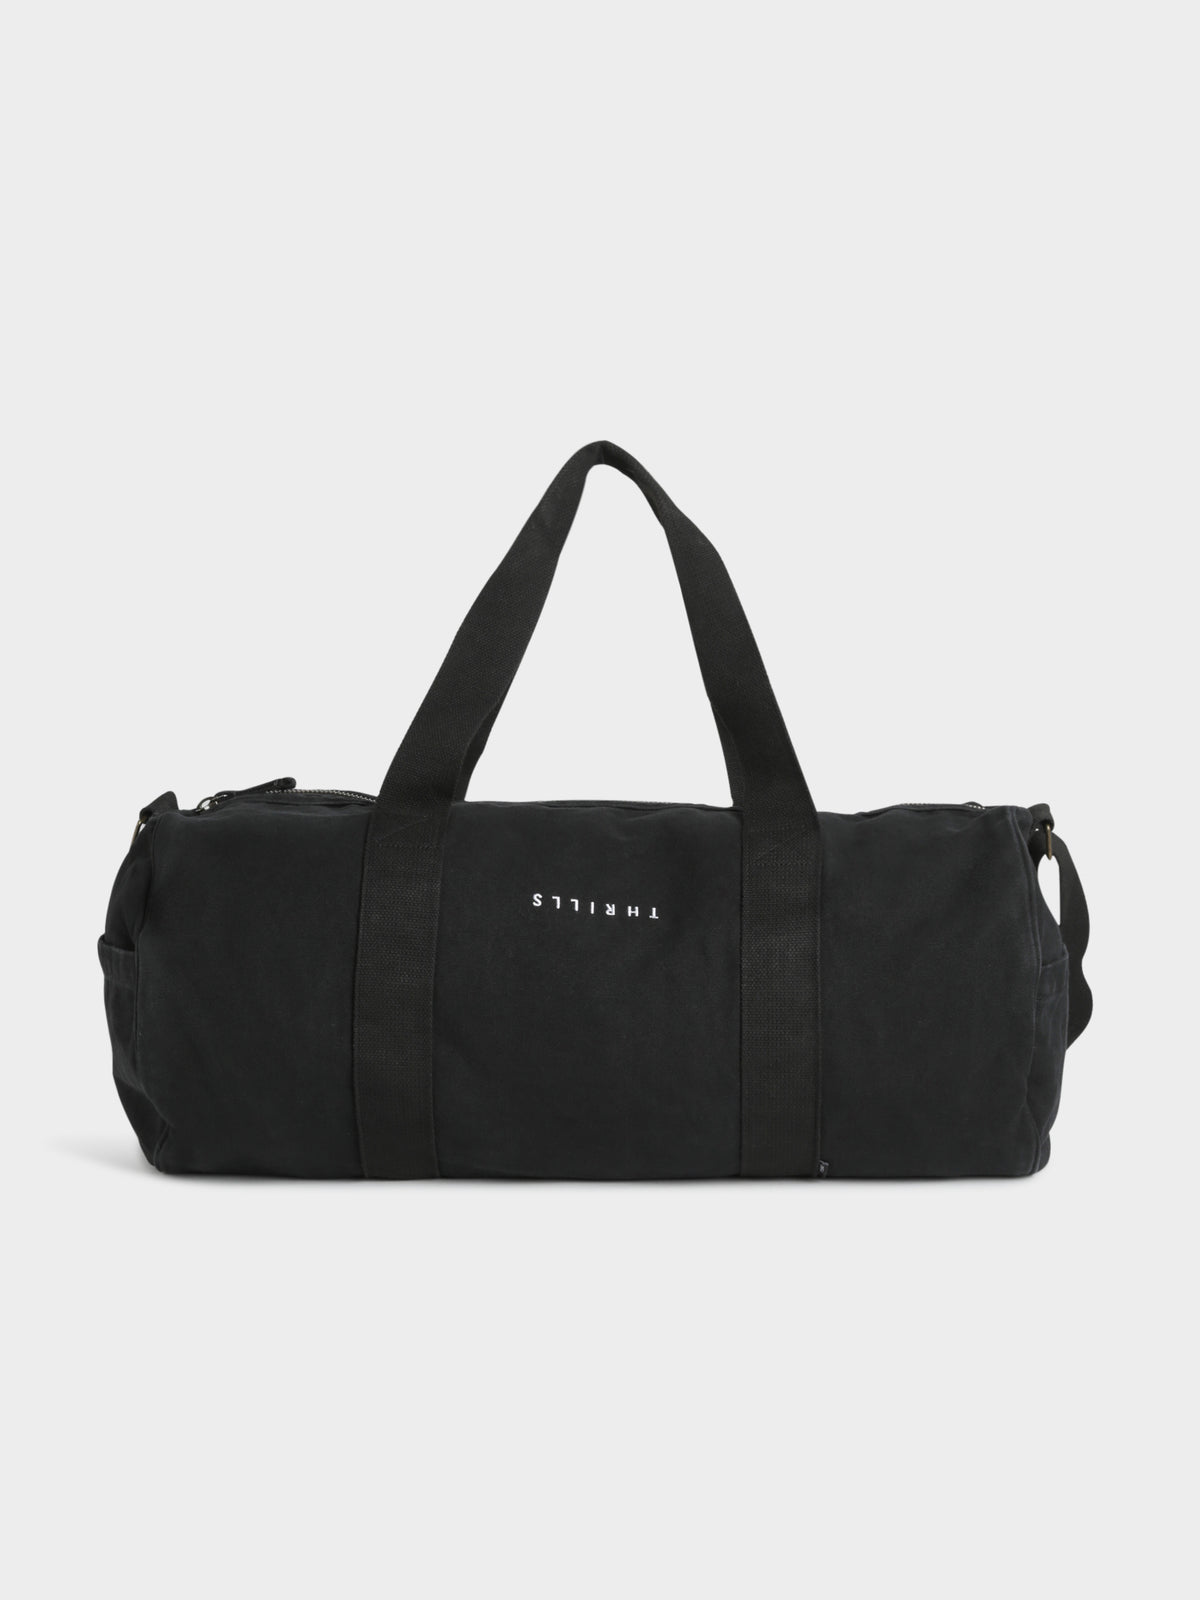 Minimal Thrills Road Duffle Bag in Black